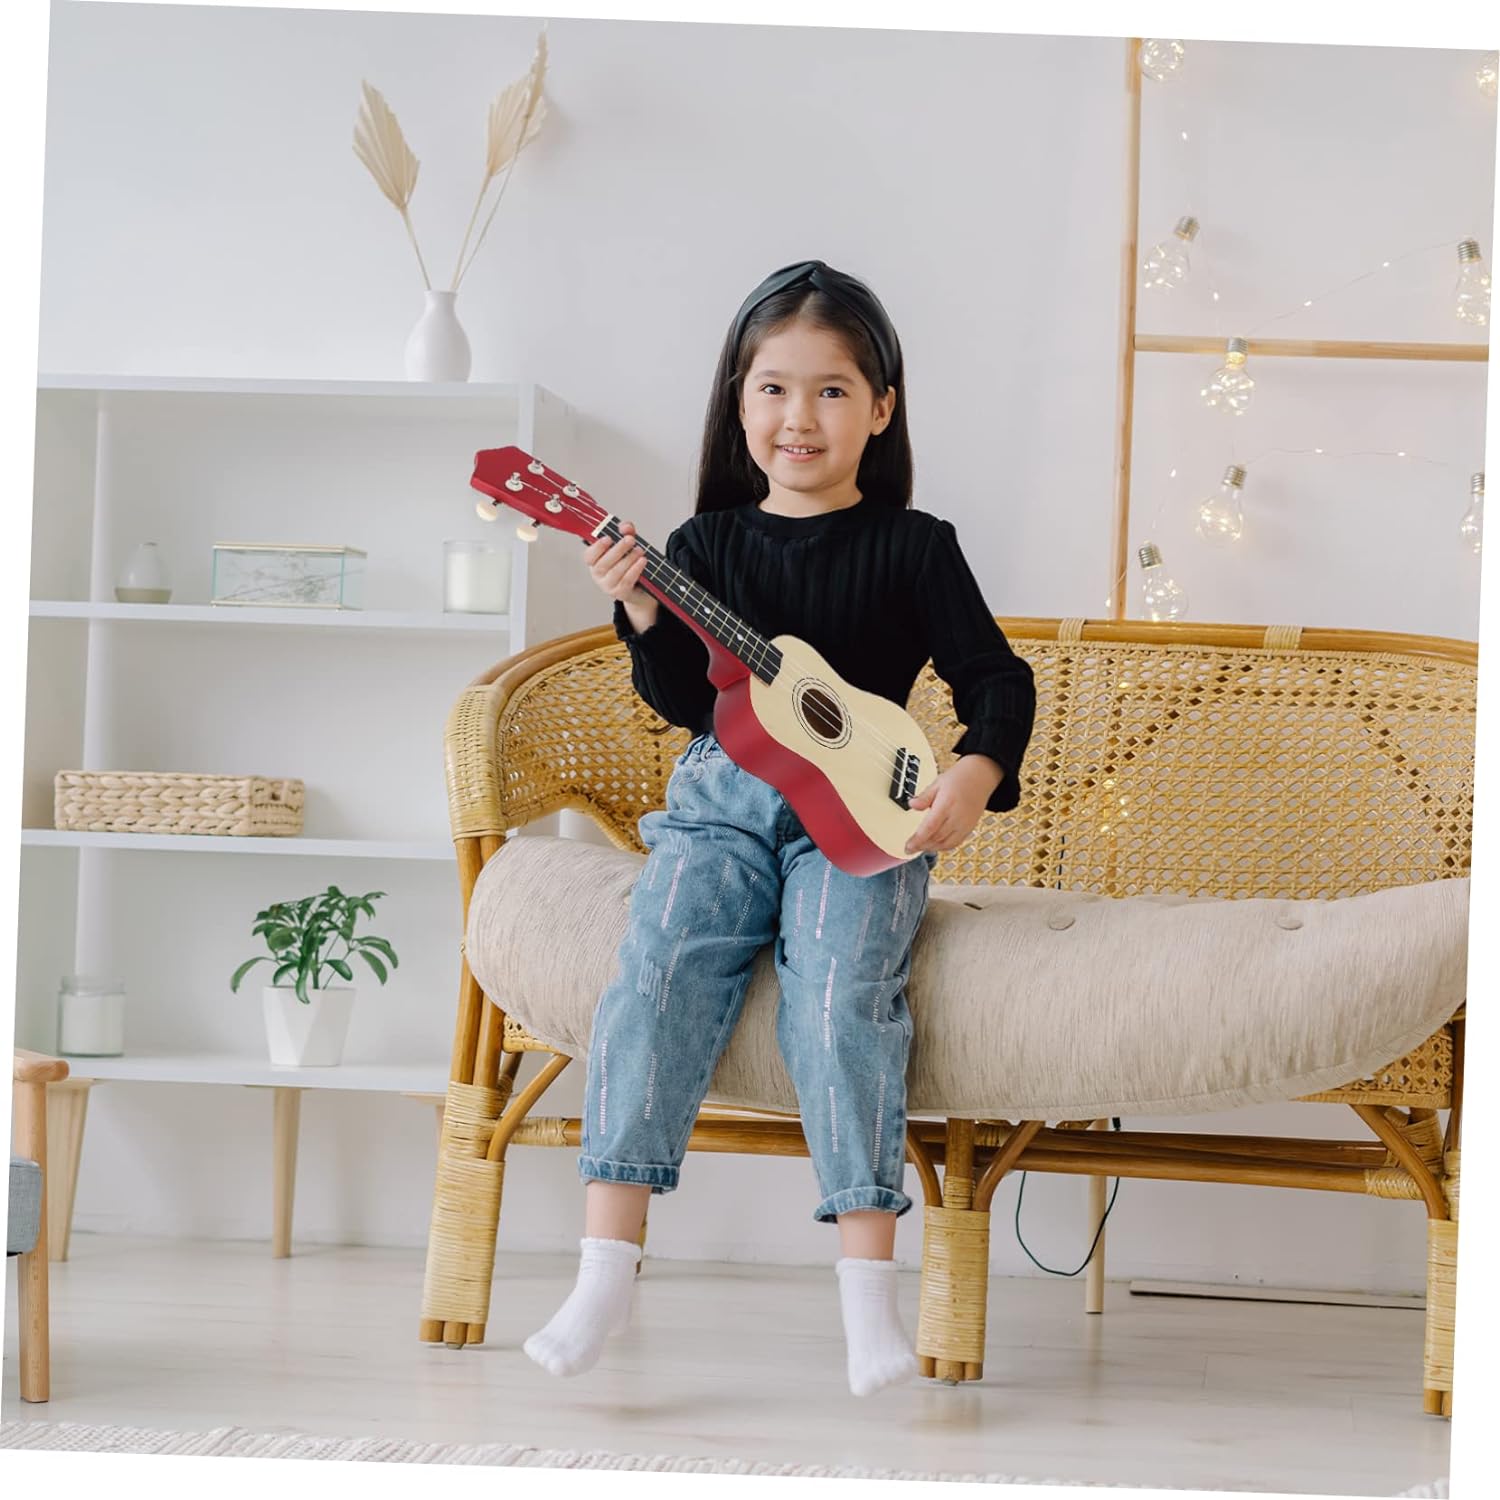 SUPVOX 1set Wooden Ukulele Child Portable Small Guitar High Environmental Protection Paint